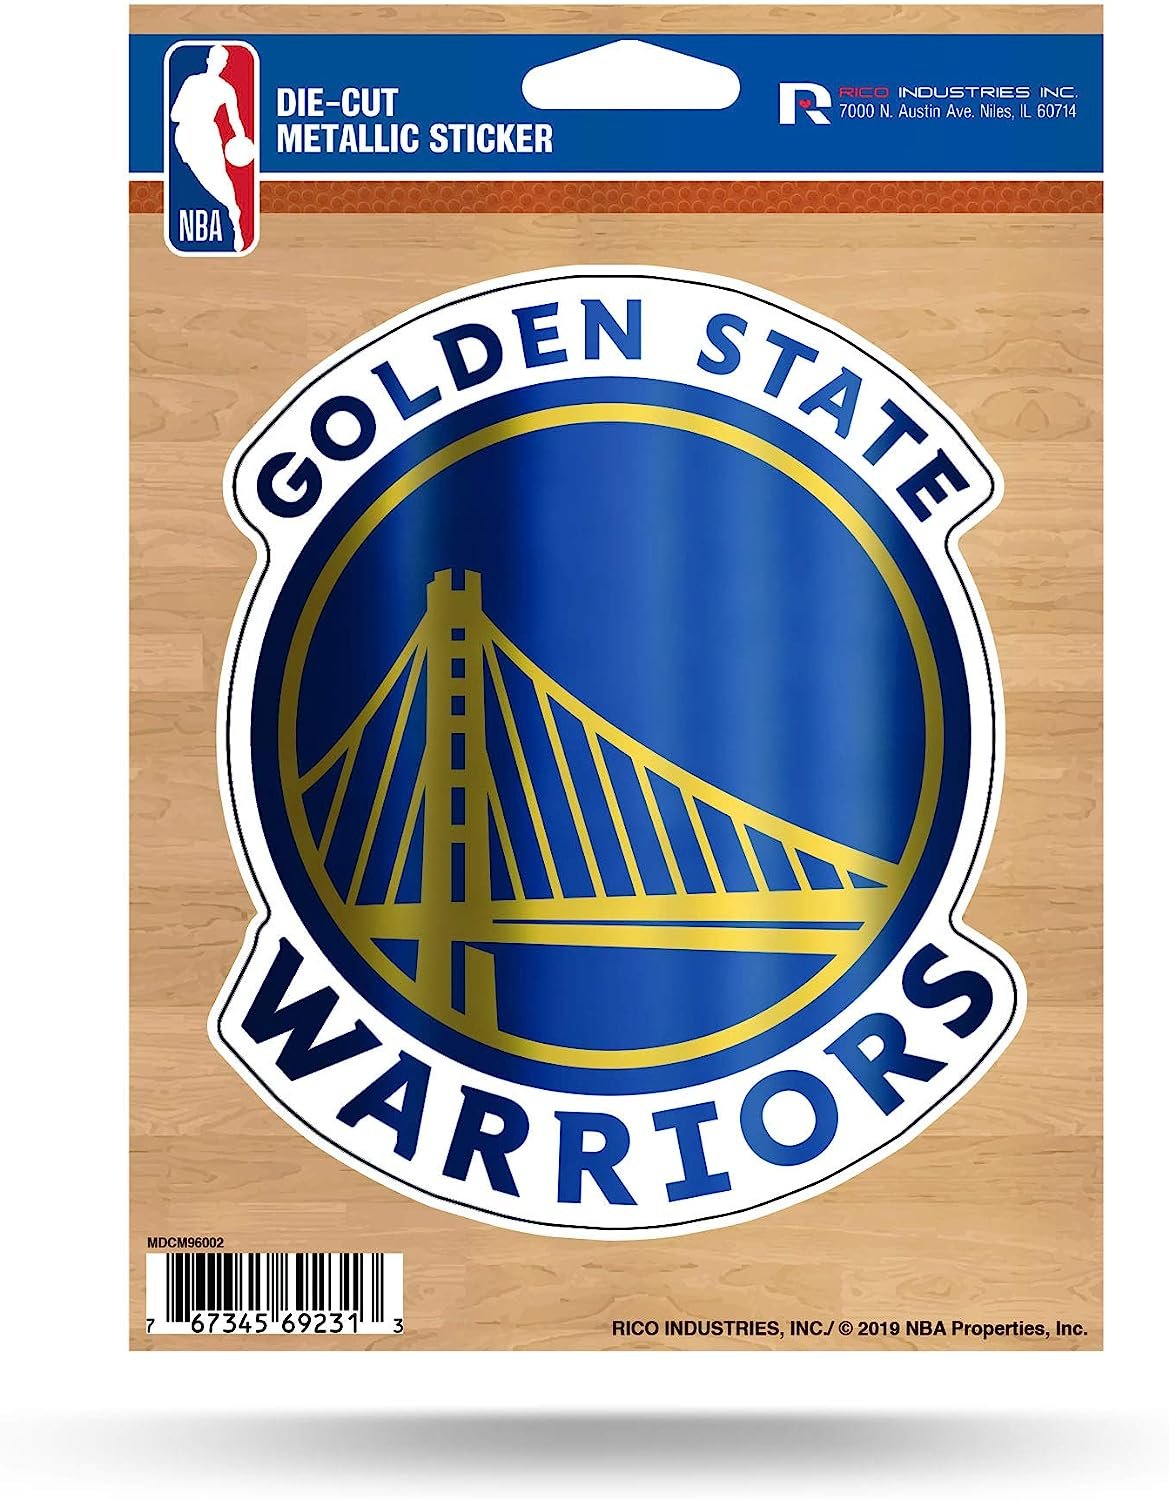 Golden State Warriors 5 Inch Die Cut Flat Vinyl Decal Sticker, Chrome Metallic Shimmer Design, Full Adhesive Backing